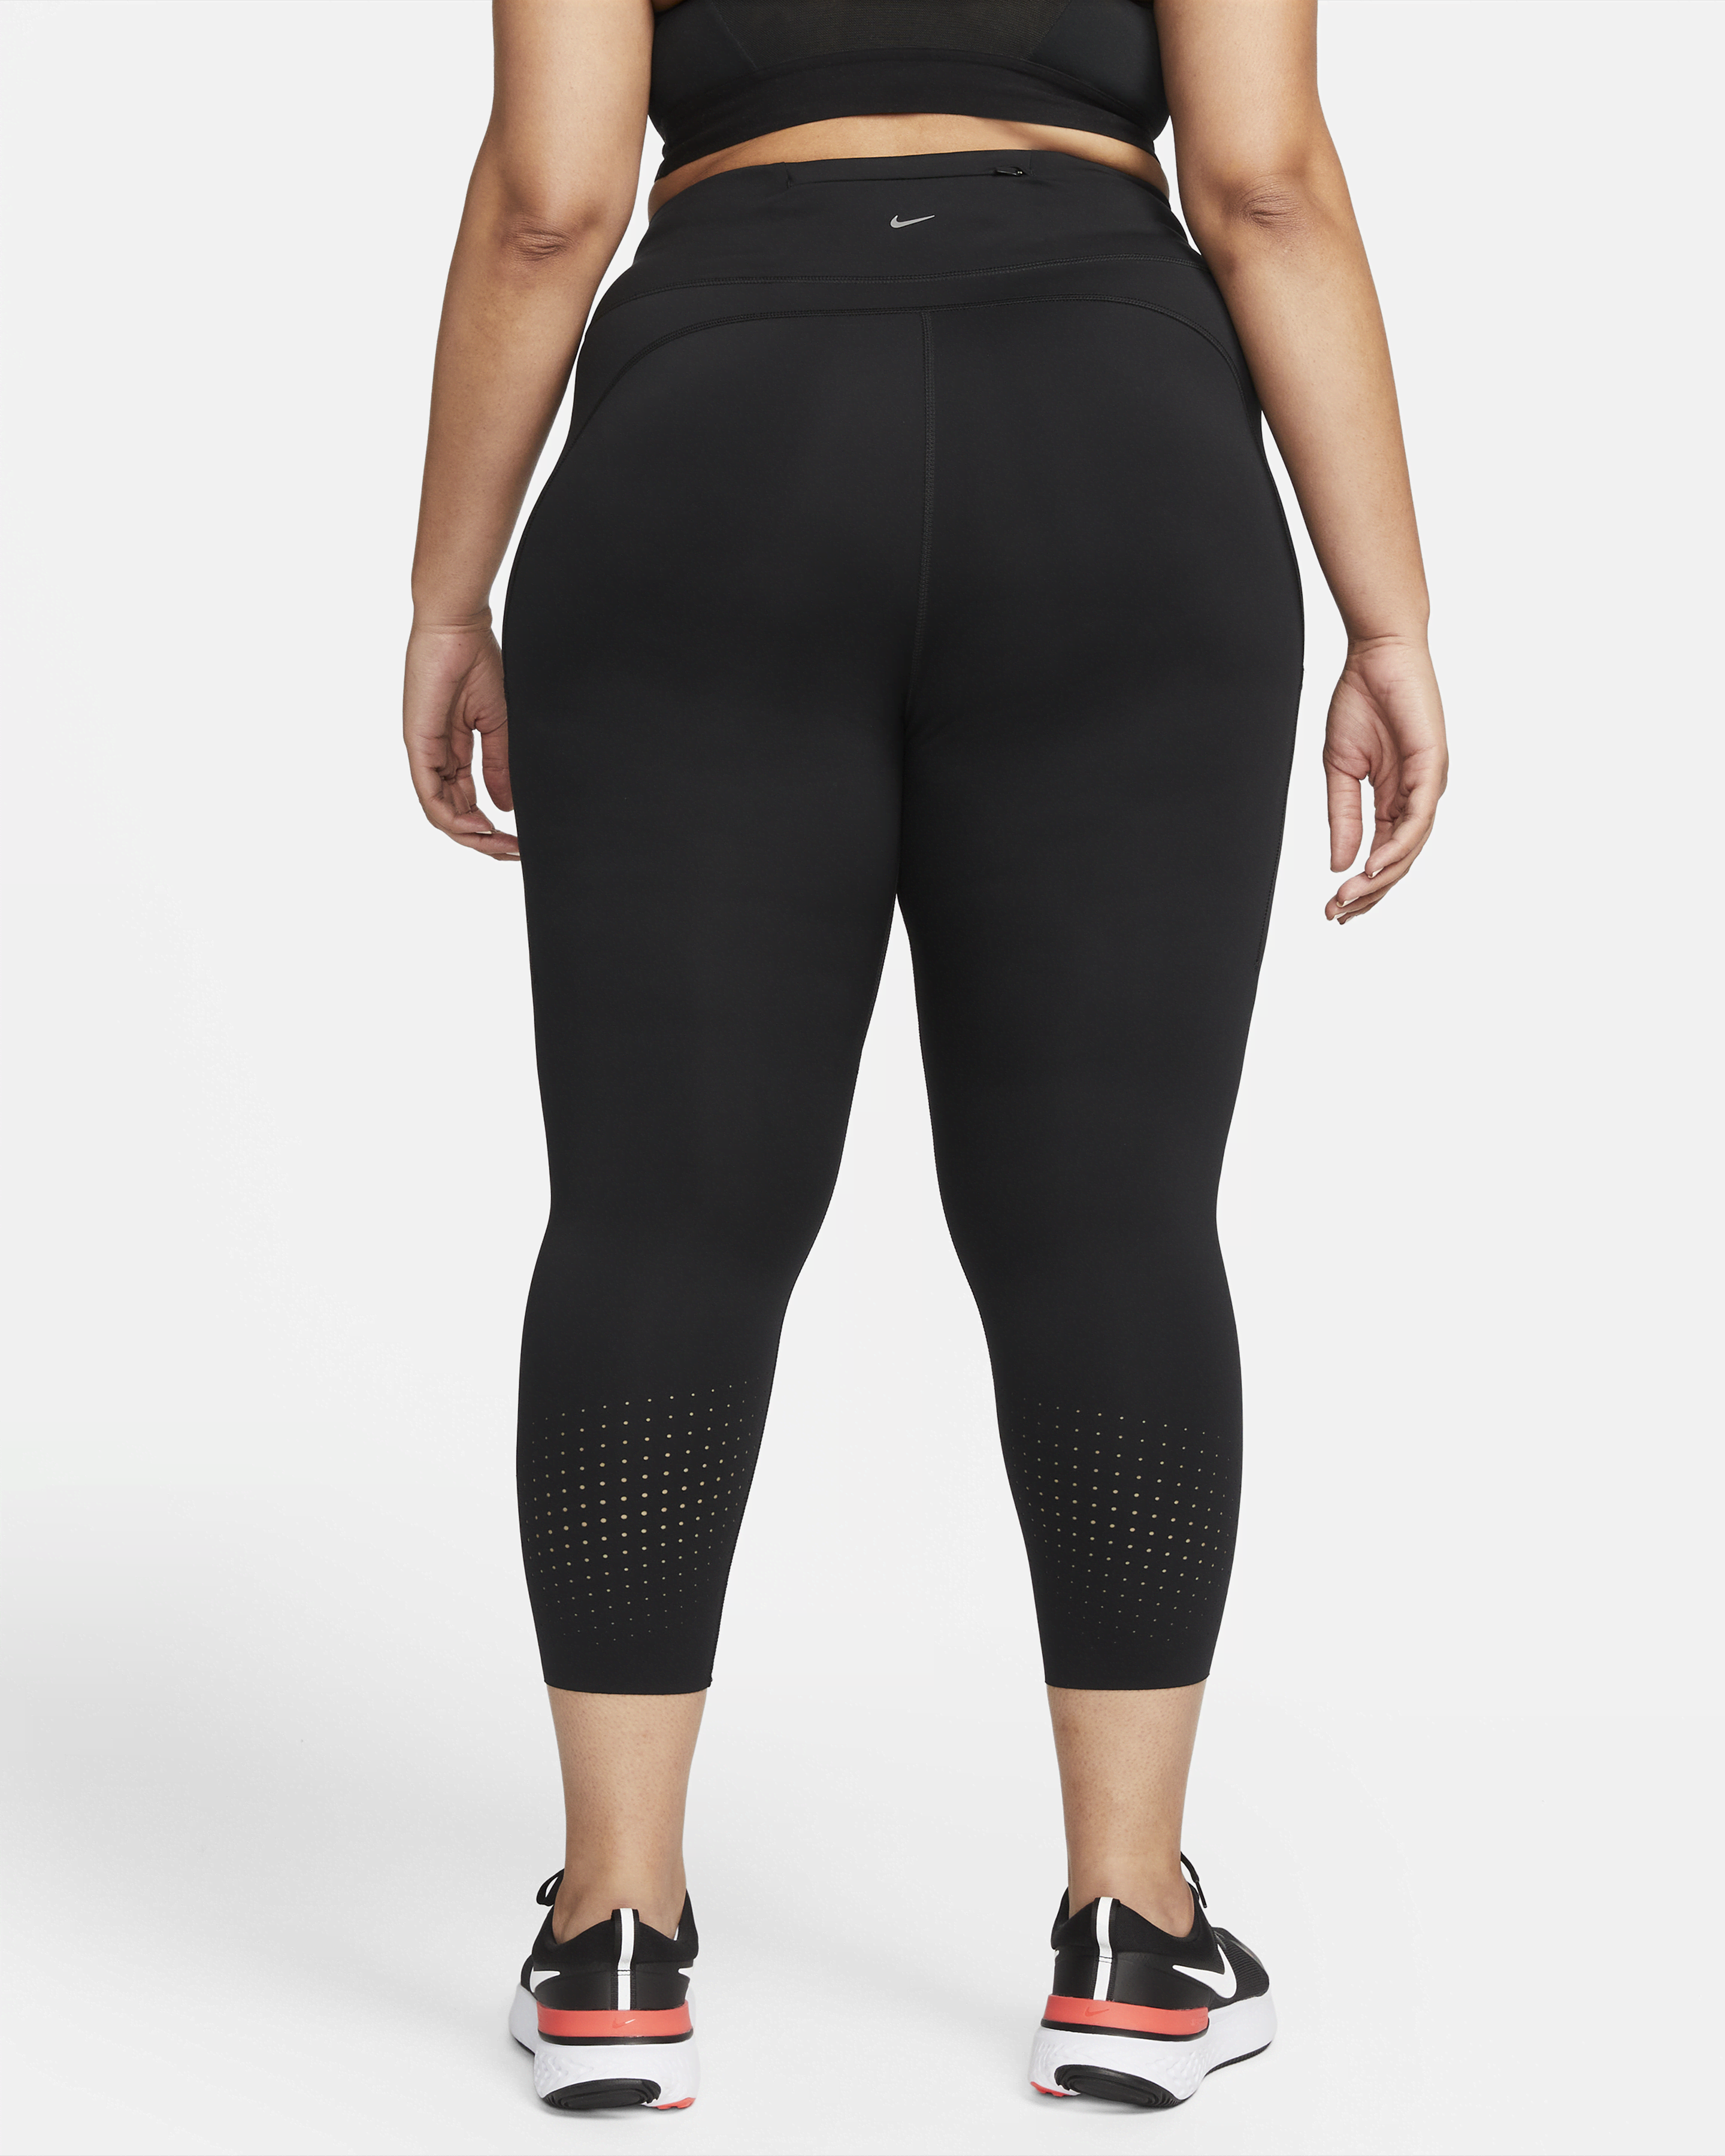 Nike Dri-Fit Power Essential Capri Womens Running Tights (Black-Pink), Nike, All Womens Clothing, Womenswear